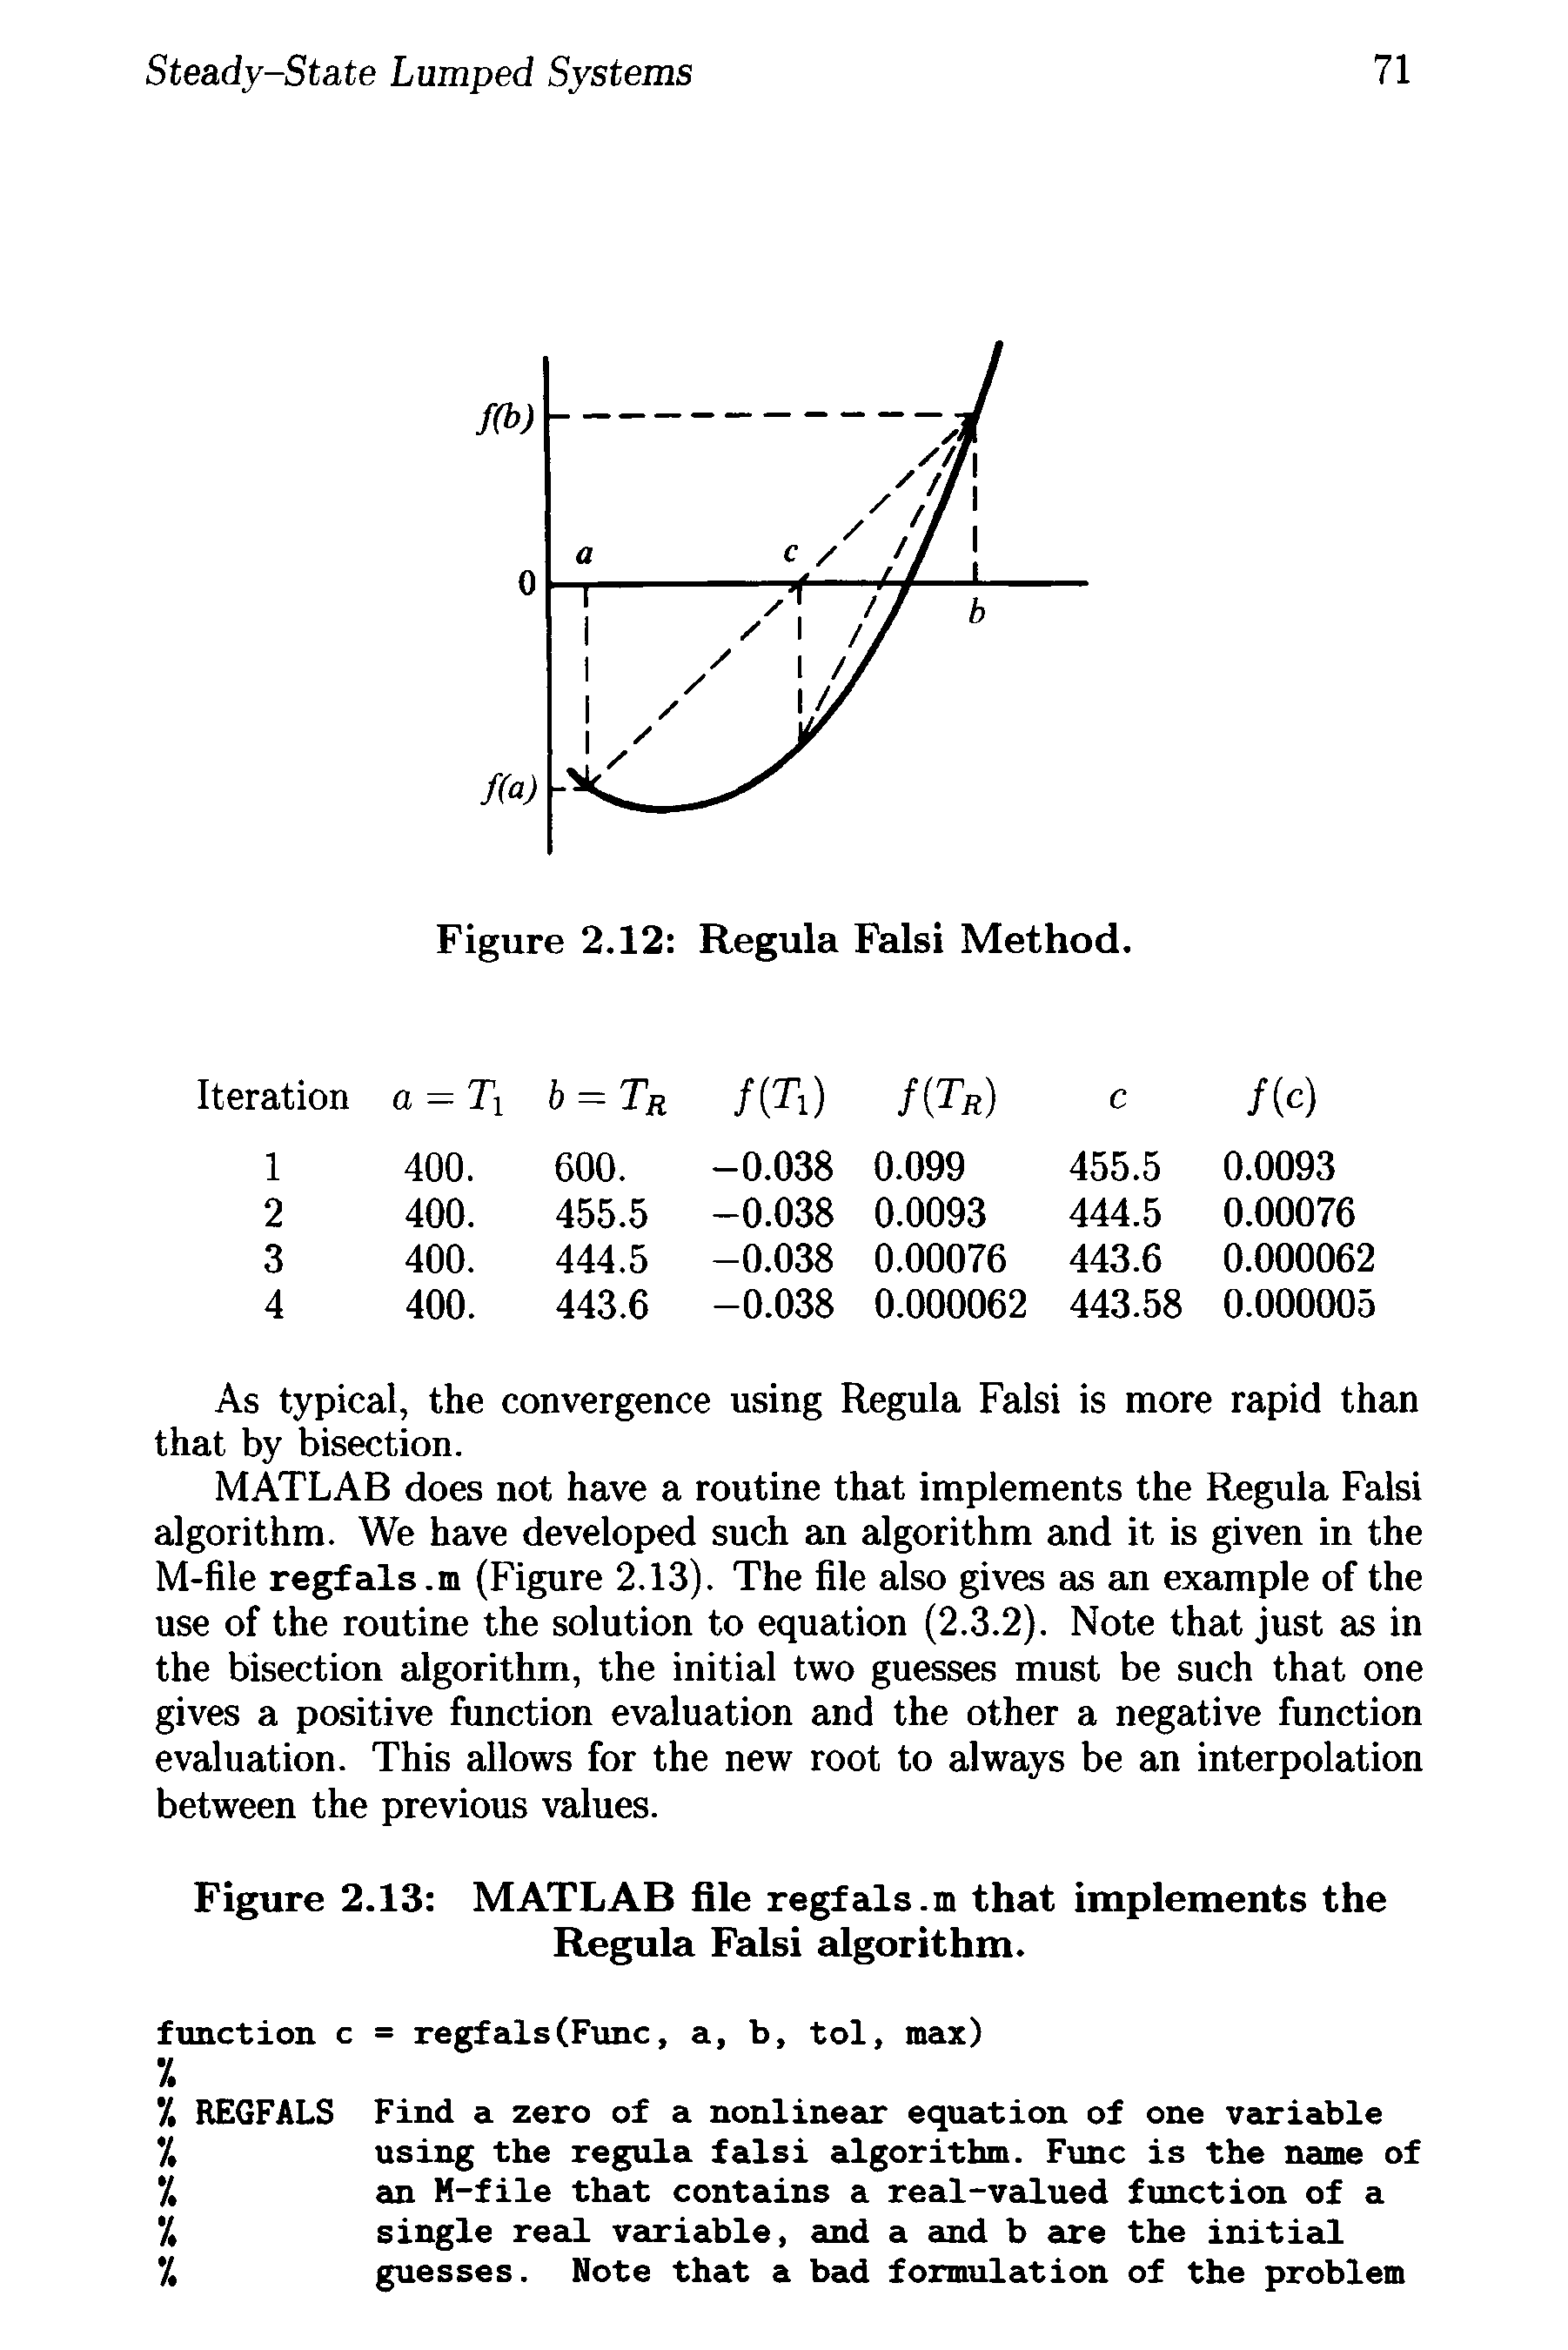 Figure 2.13 MATLAB file regfals.m that implements the Regula Falsi algorithm.